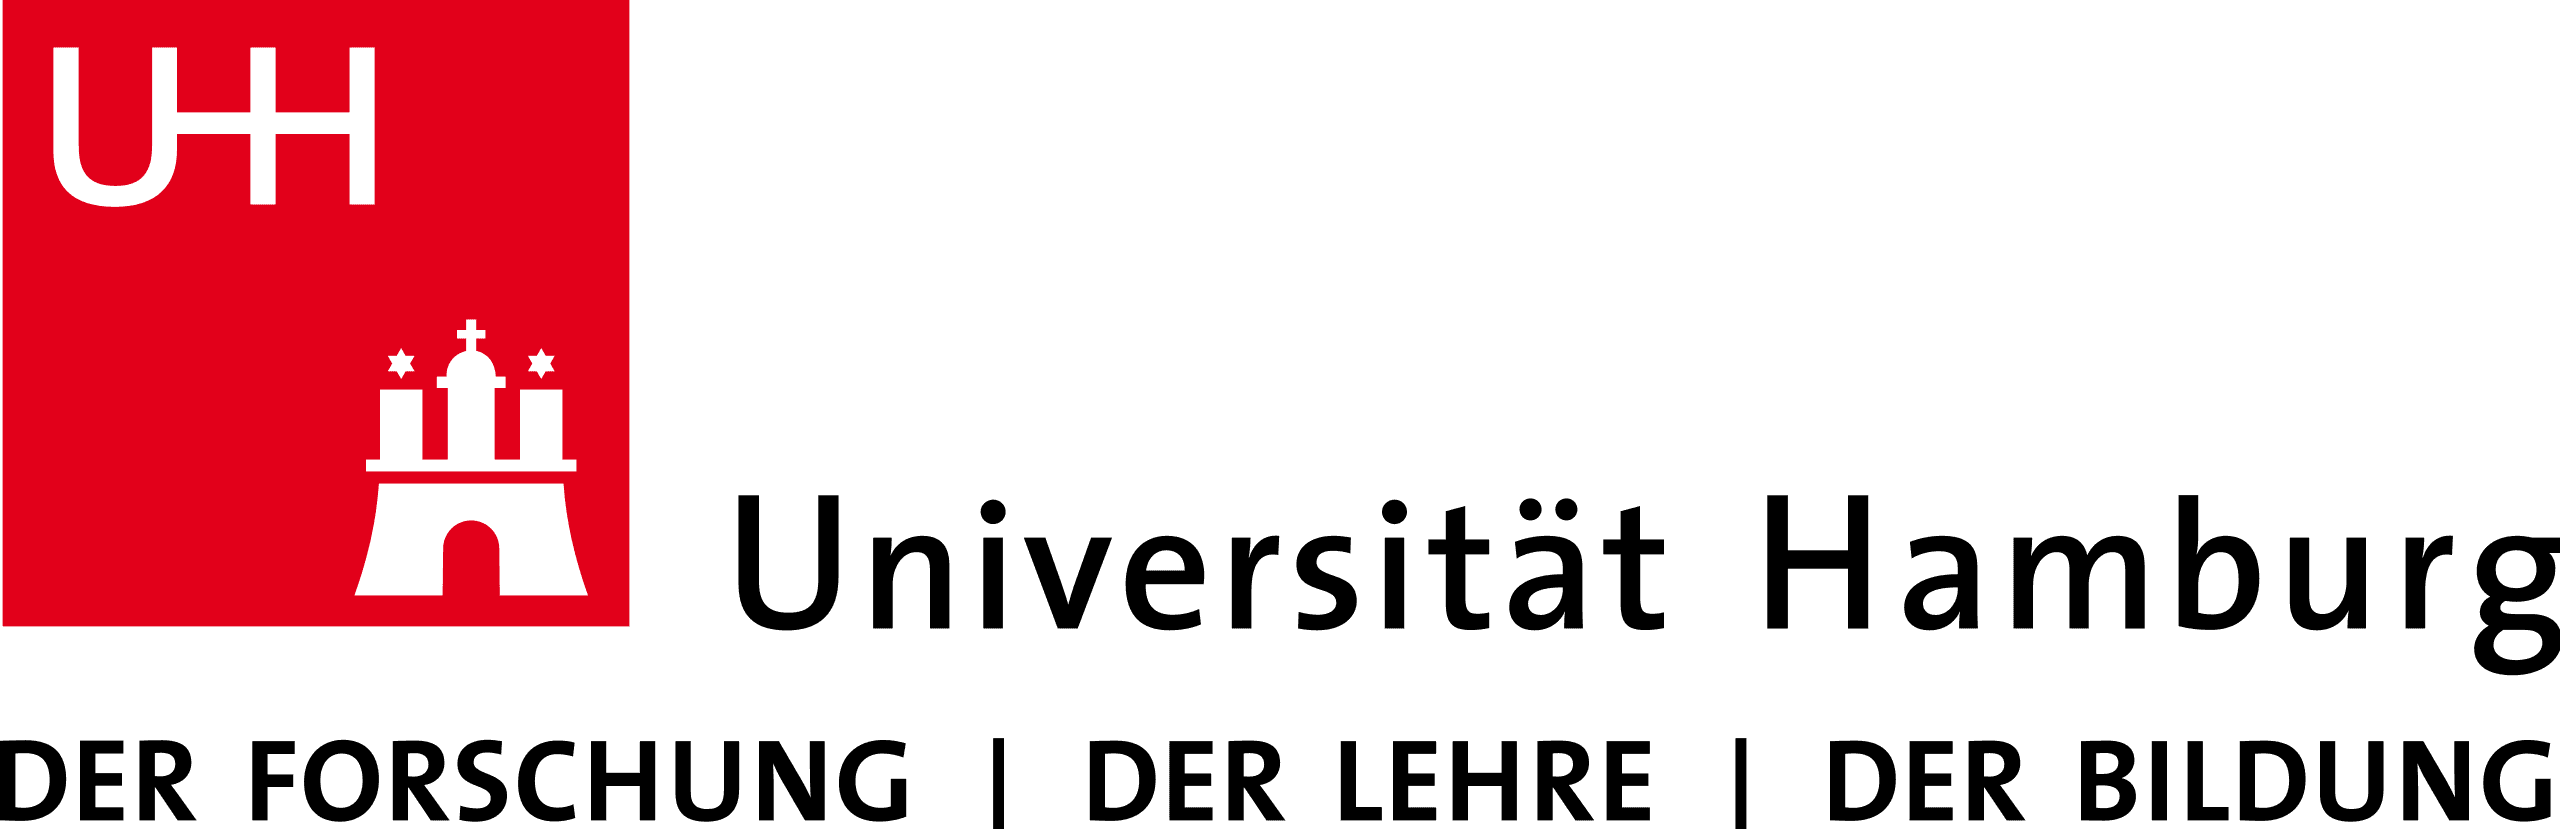 universitat-hamburg-dca26391b8-cover-picture